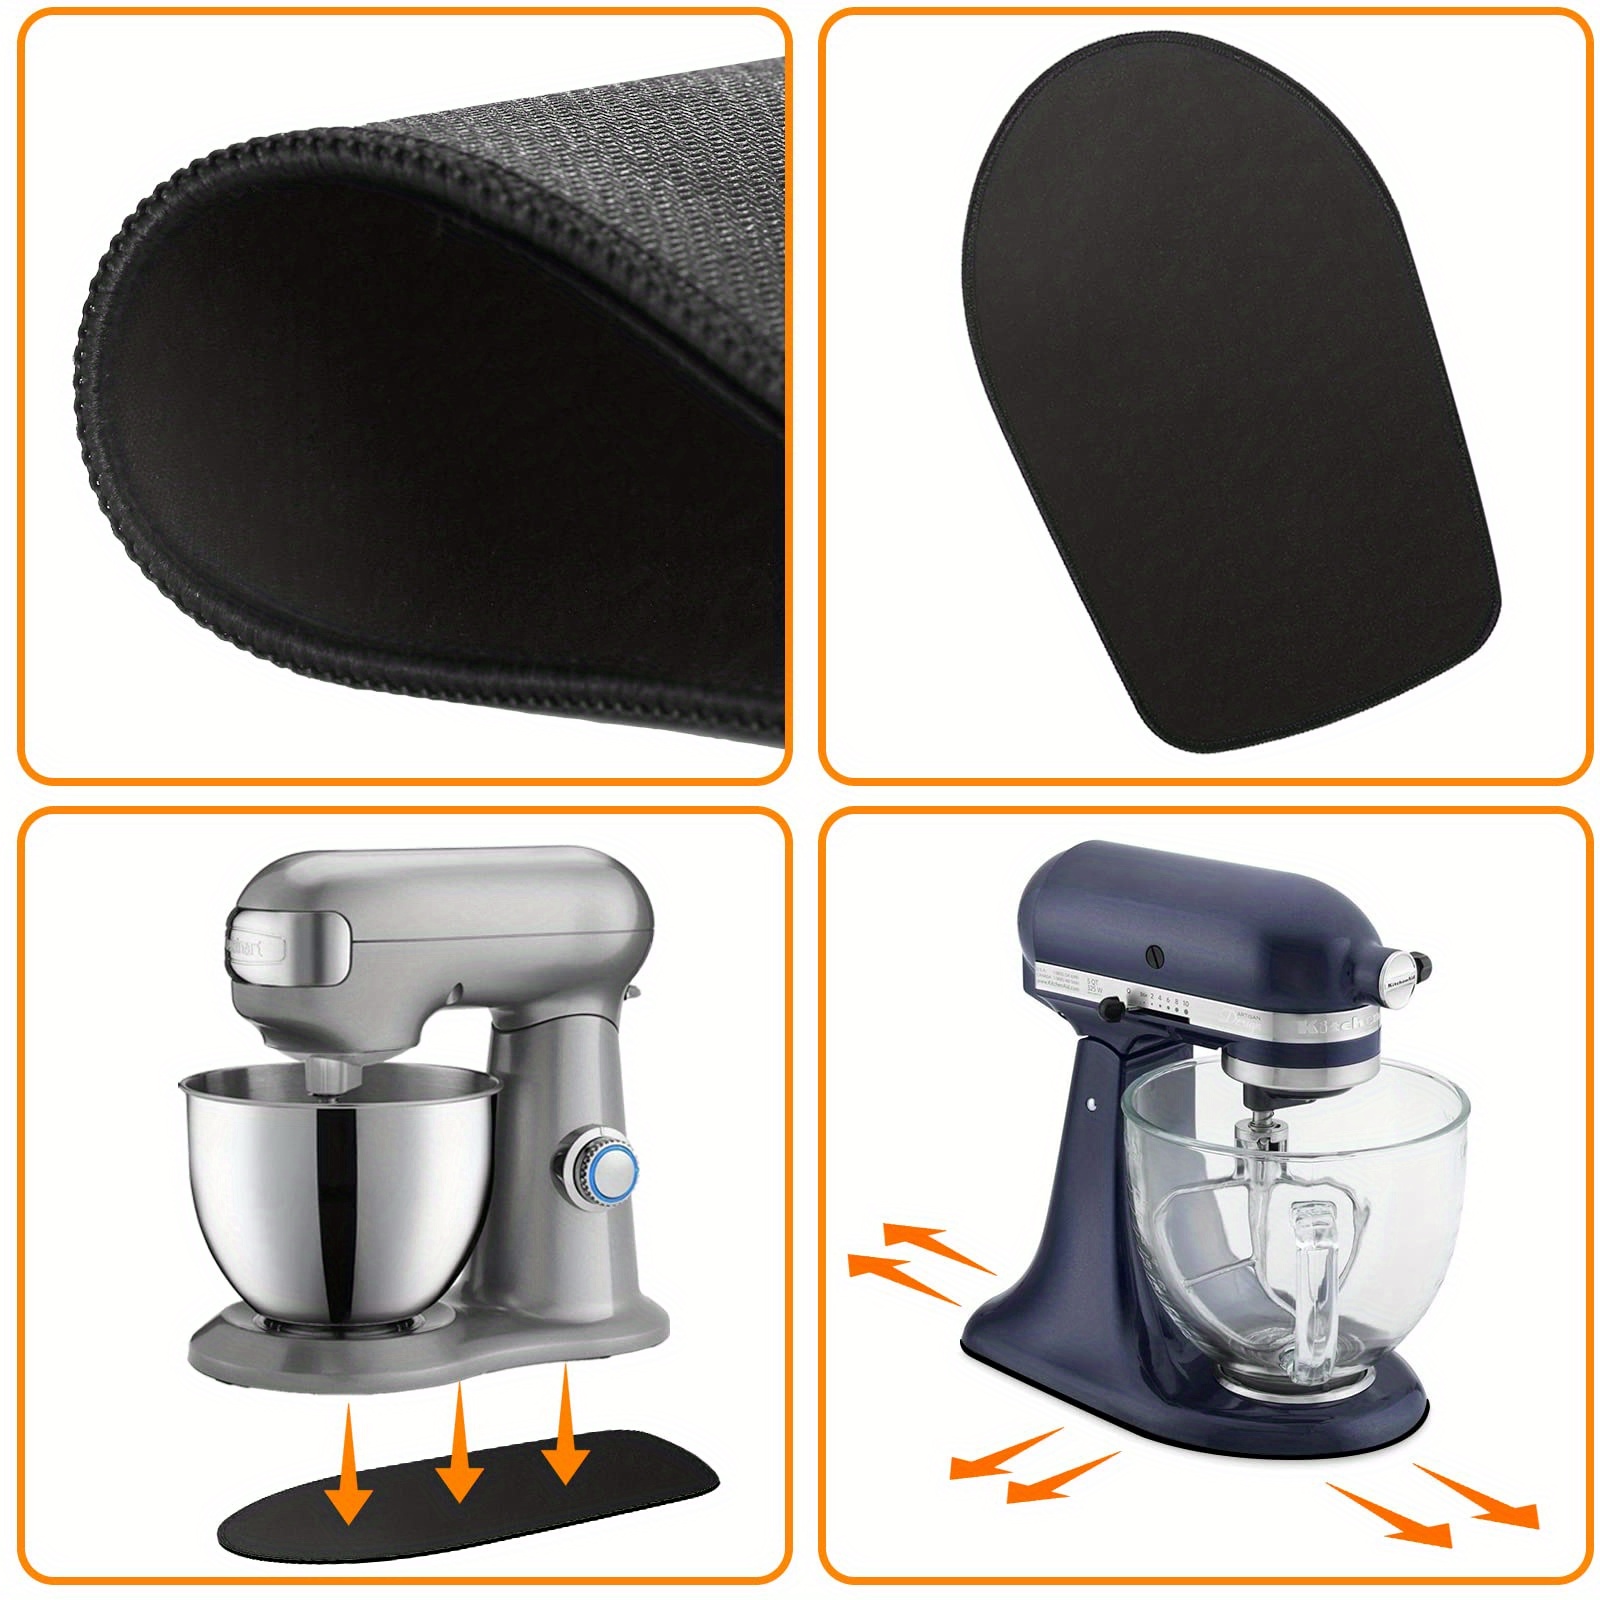 Kitchen Appliance Slider Mats, Tilt-Head Stand Mixer,Sliding Appliance  Rolling Tray,Appliance Sliders for Kitchen Appliances, Black 